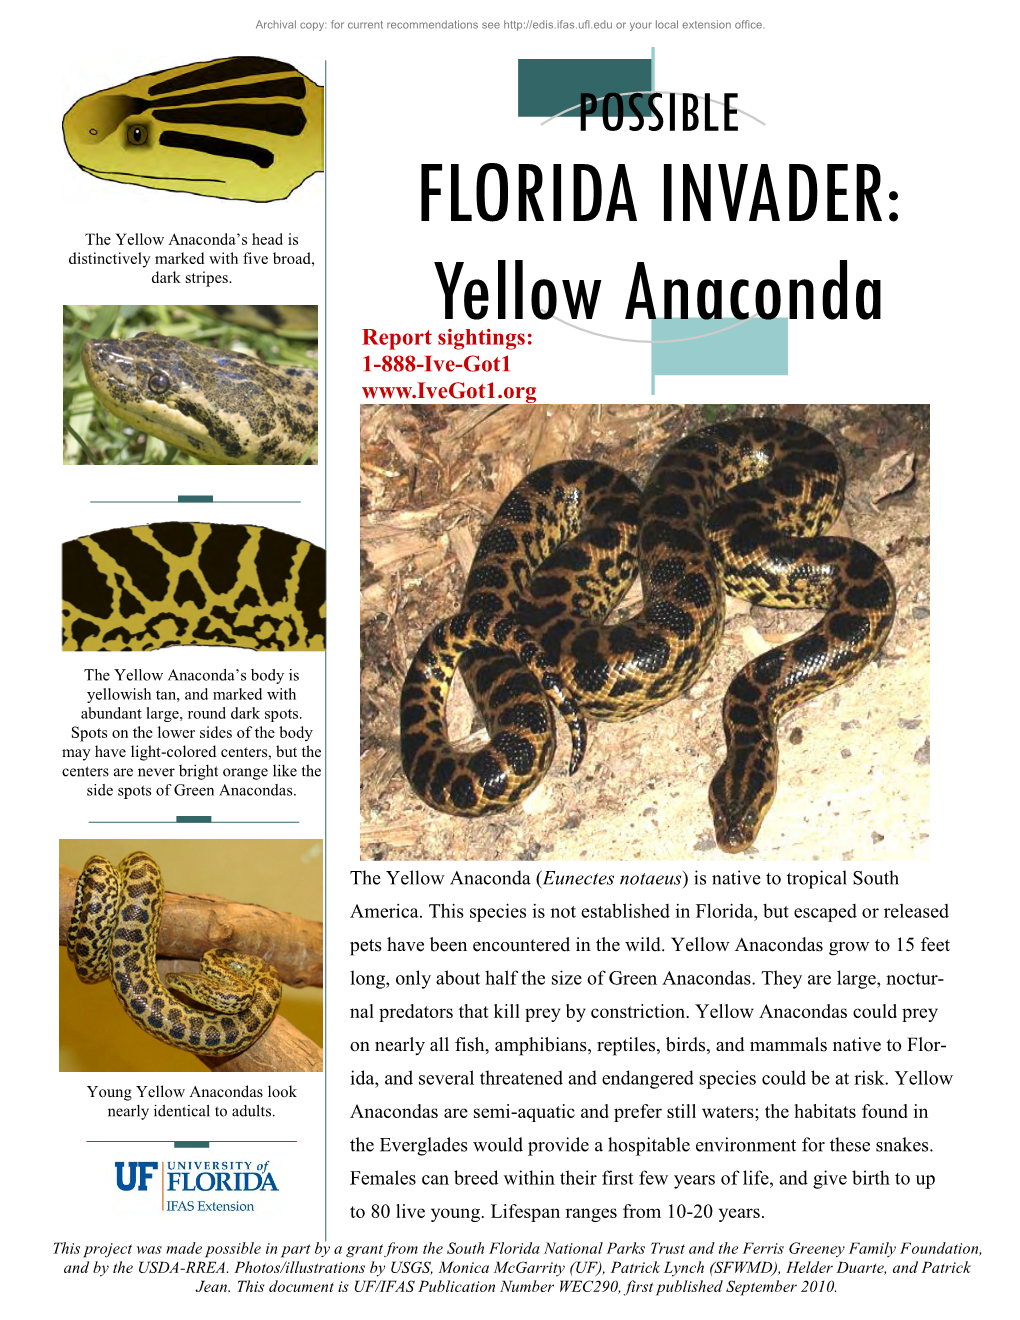 FLORIDA INVADER: Yellow Anaconda